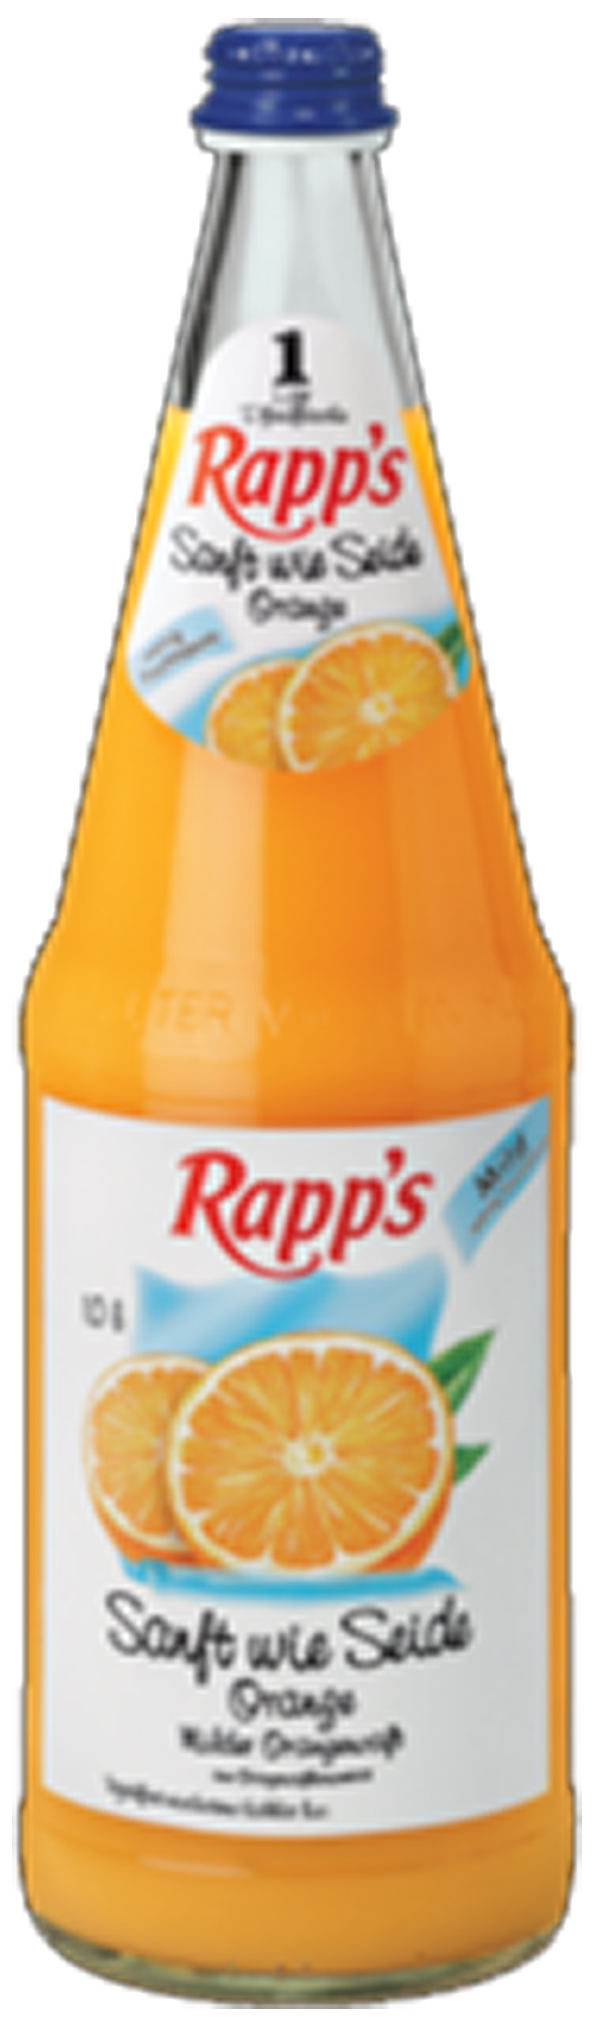 Rapps sanft wie Seide Orange  6 x 1,0 l (Glas)